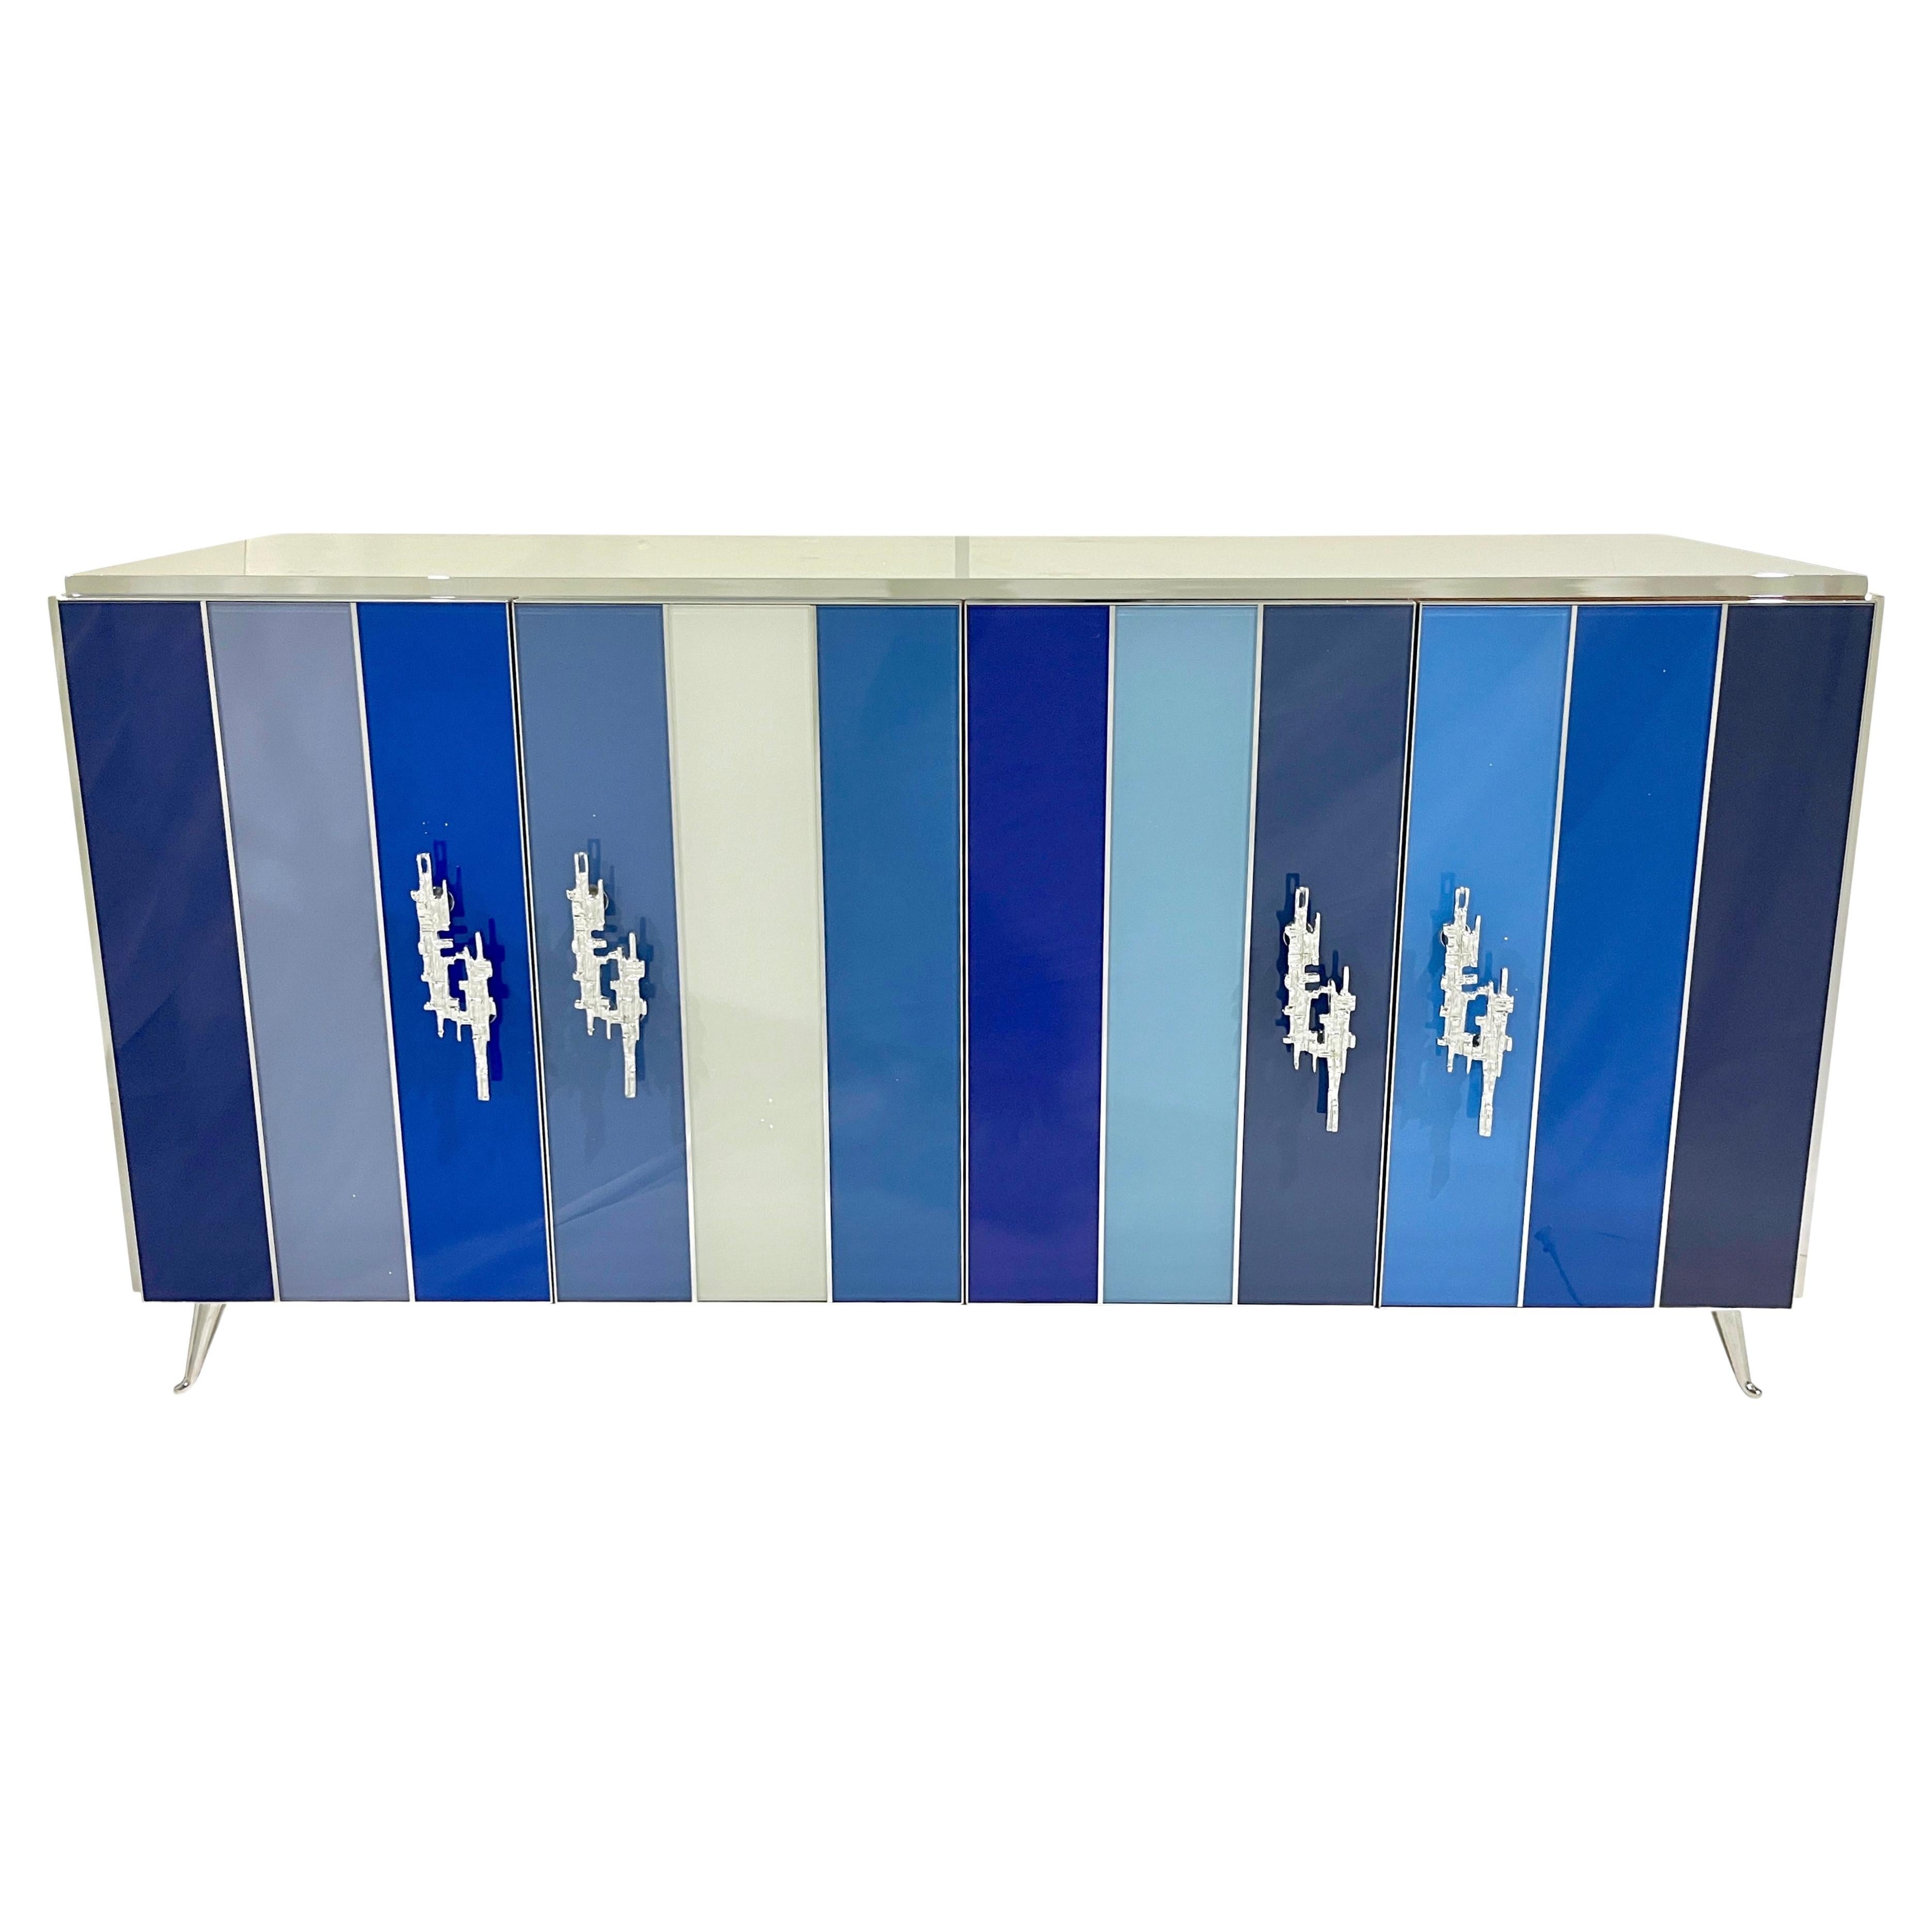 Armoire/Sideboard italienne post-moderne personnalisable en nickel, bleu, gris et blanc